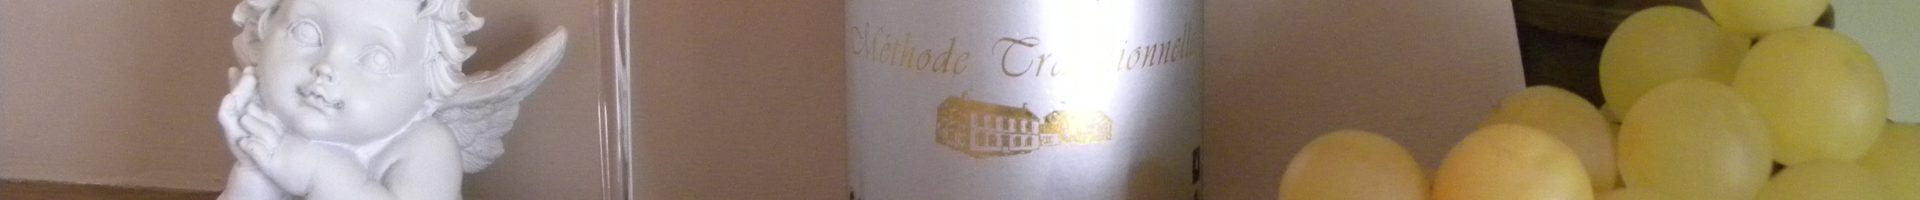 Blanc “Chardonnay” Cuvée Adeline